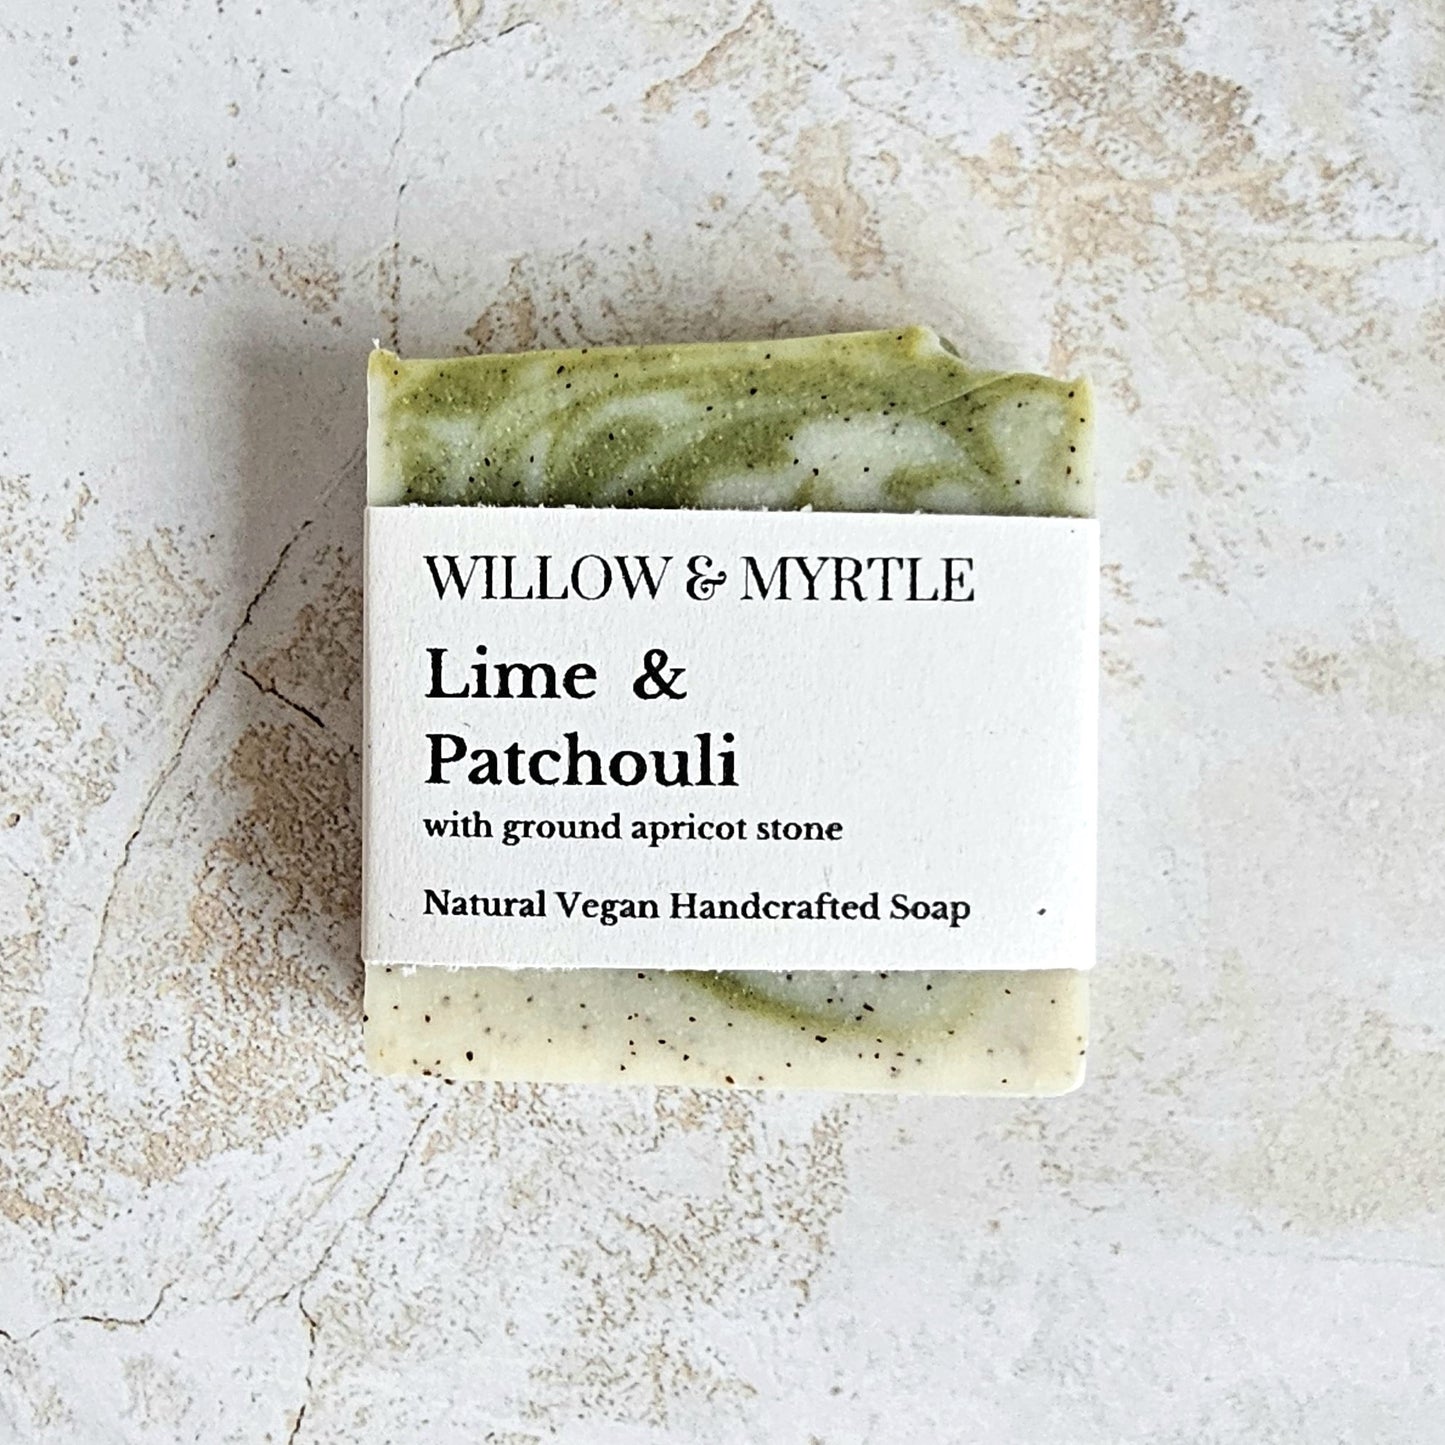 green swirl soap, square shape, label attached